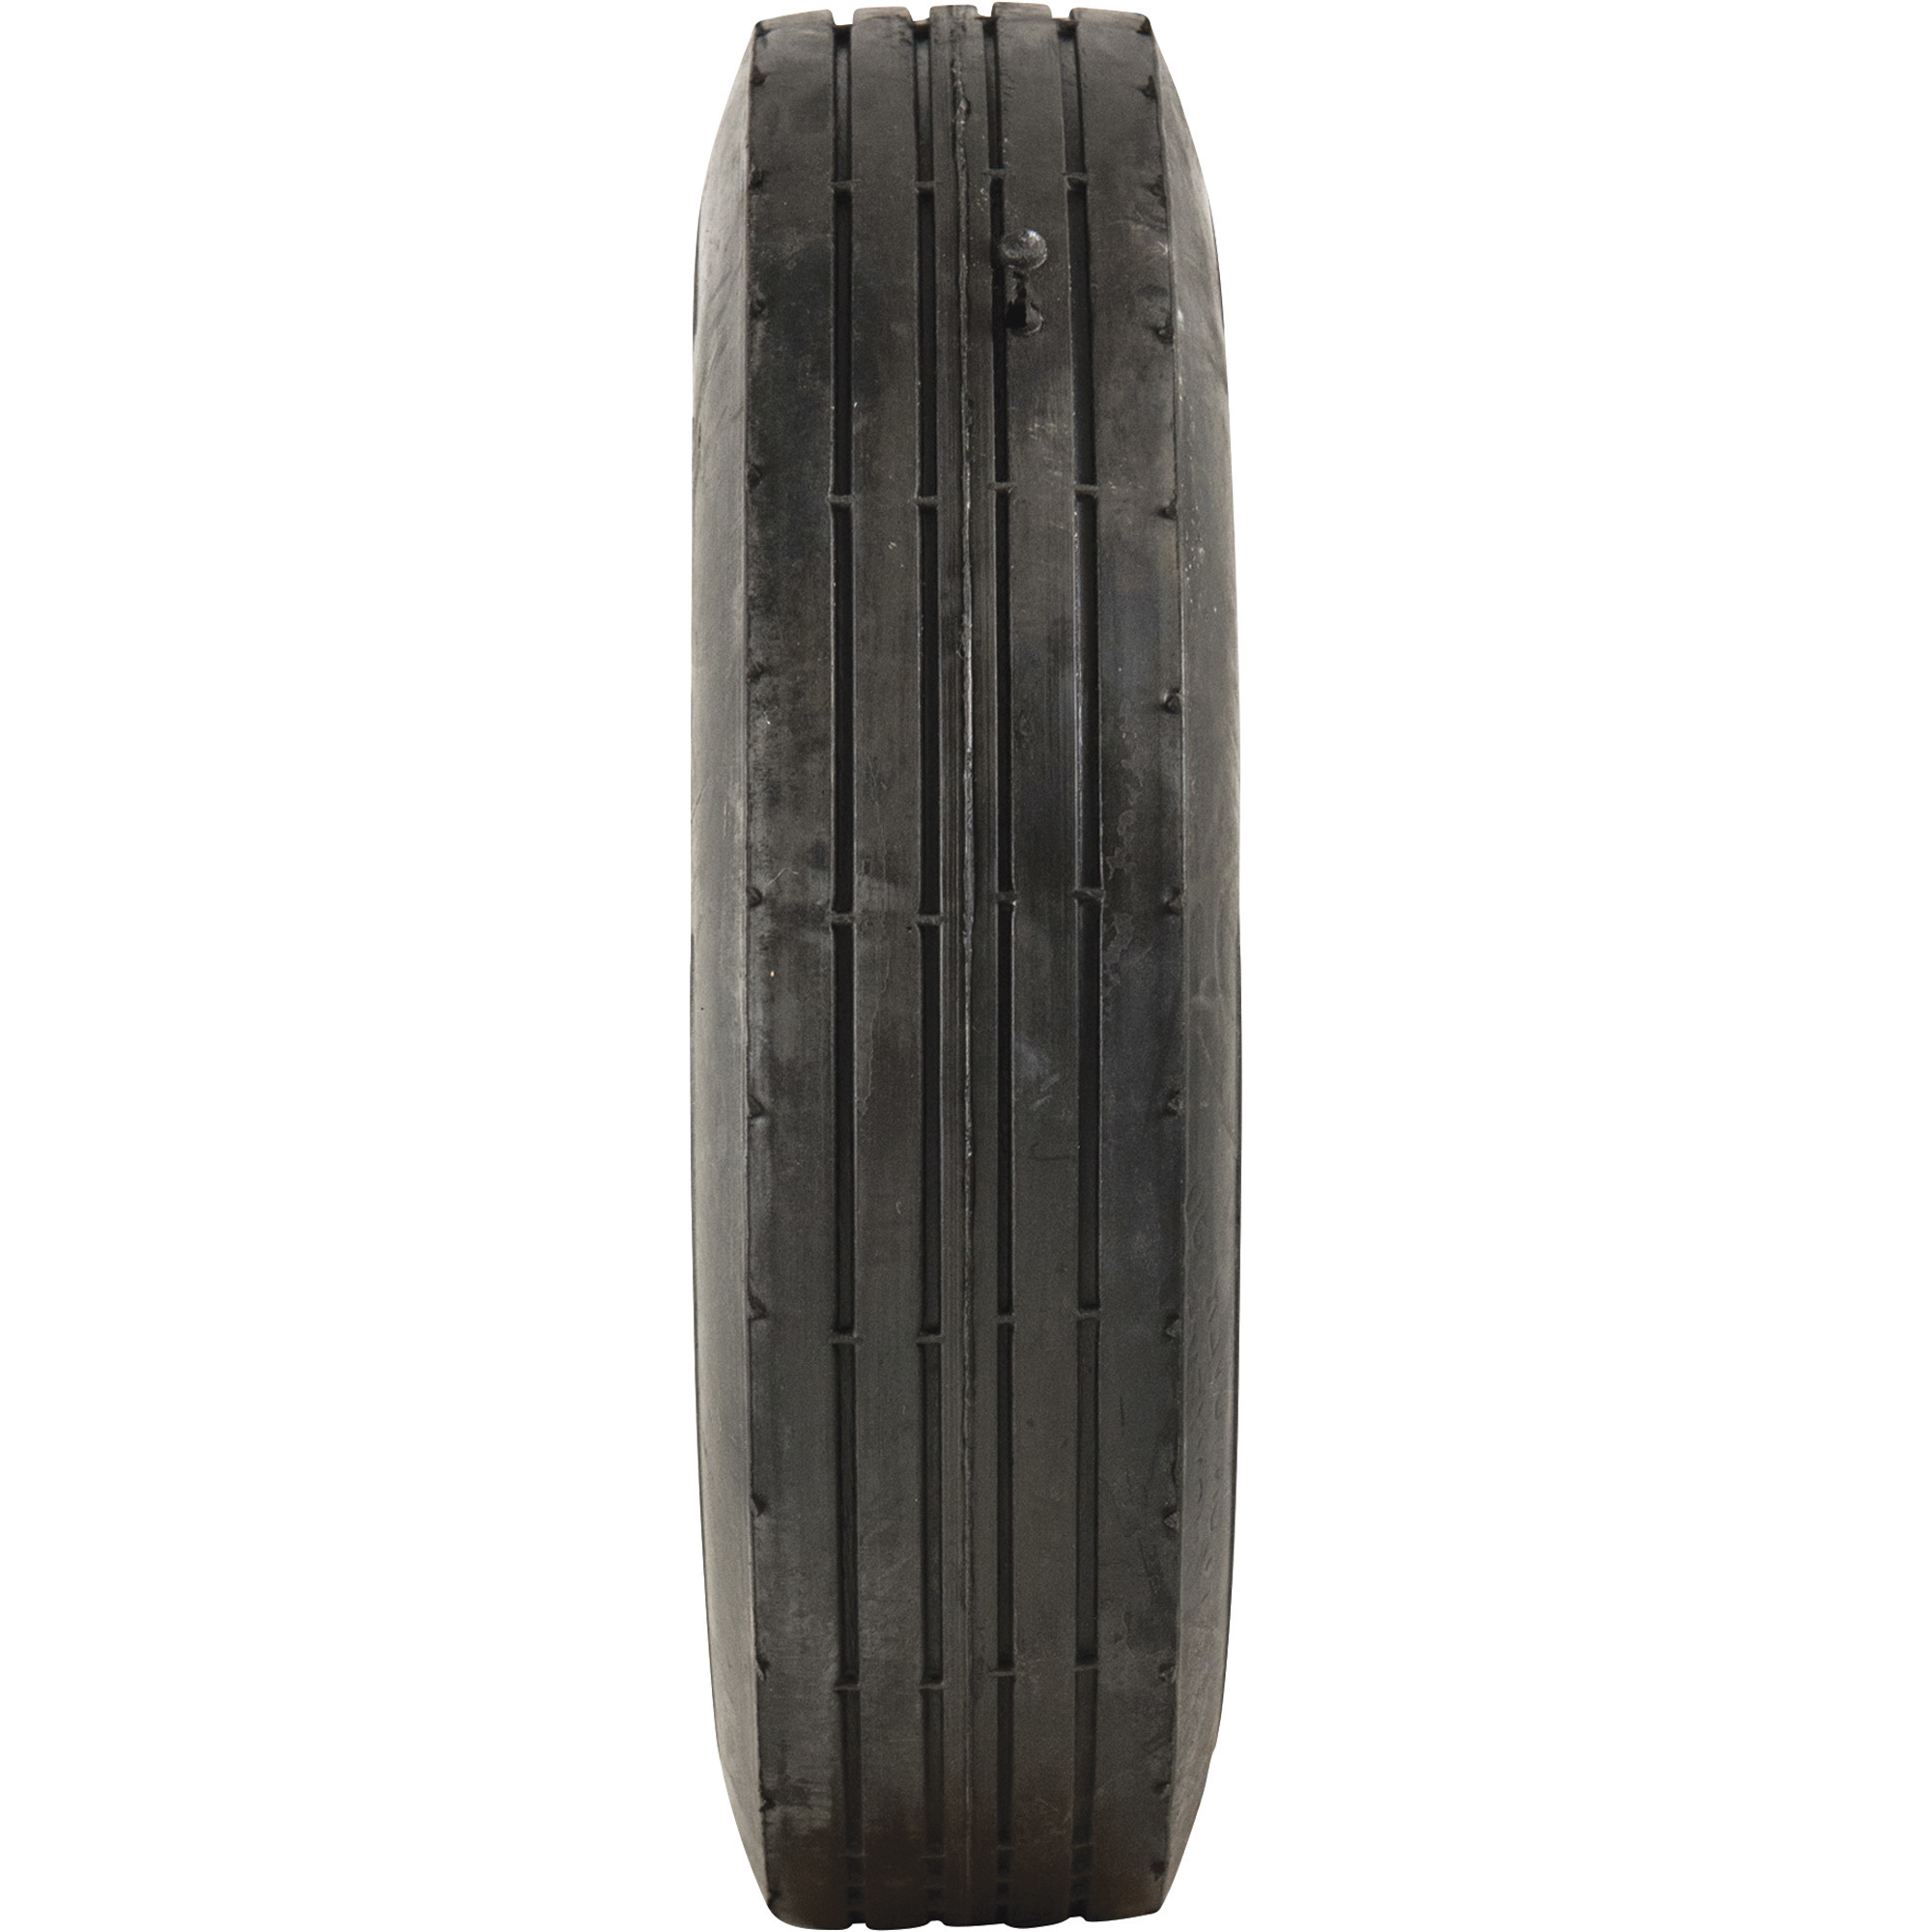 50/75-6.1 (8 1/2 x 2) Flat-Free Airless Tire